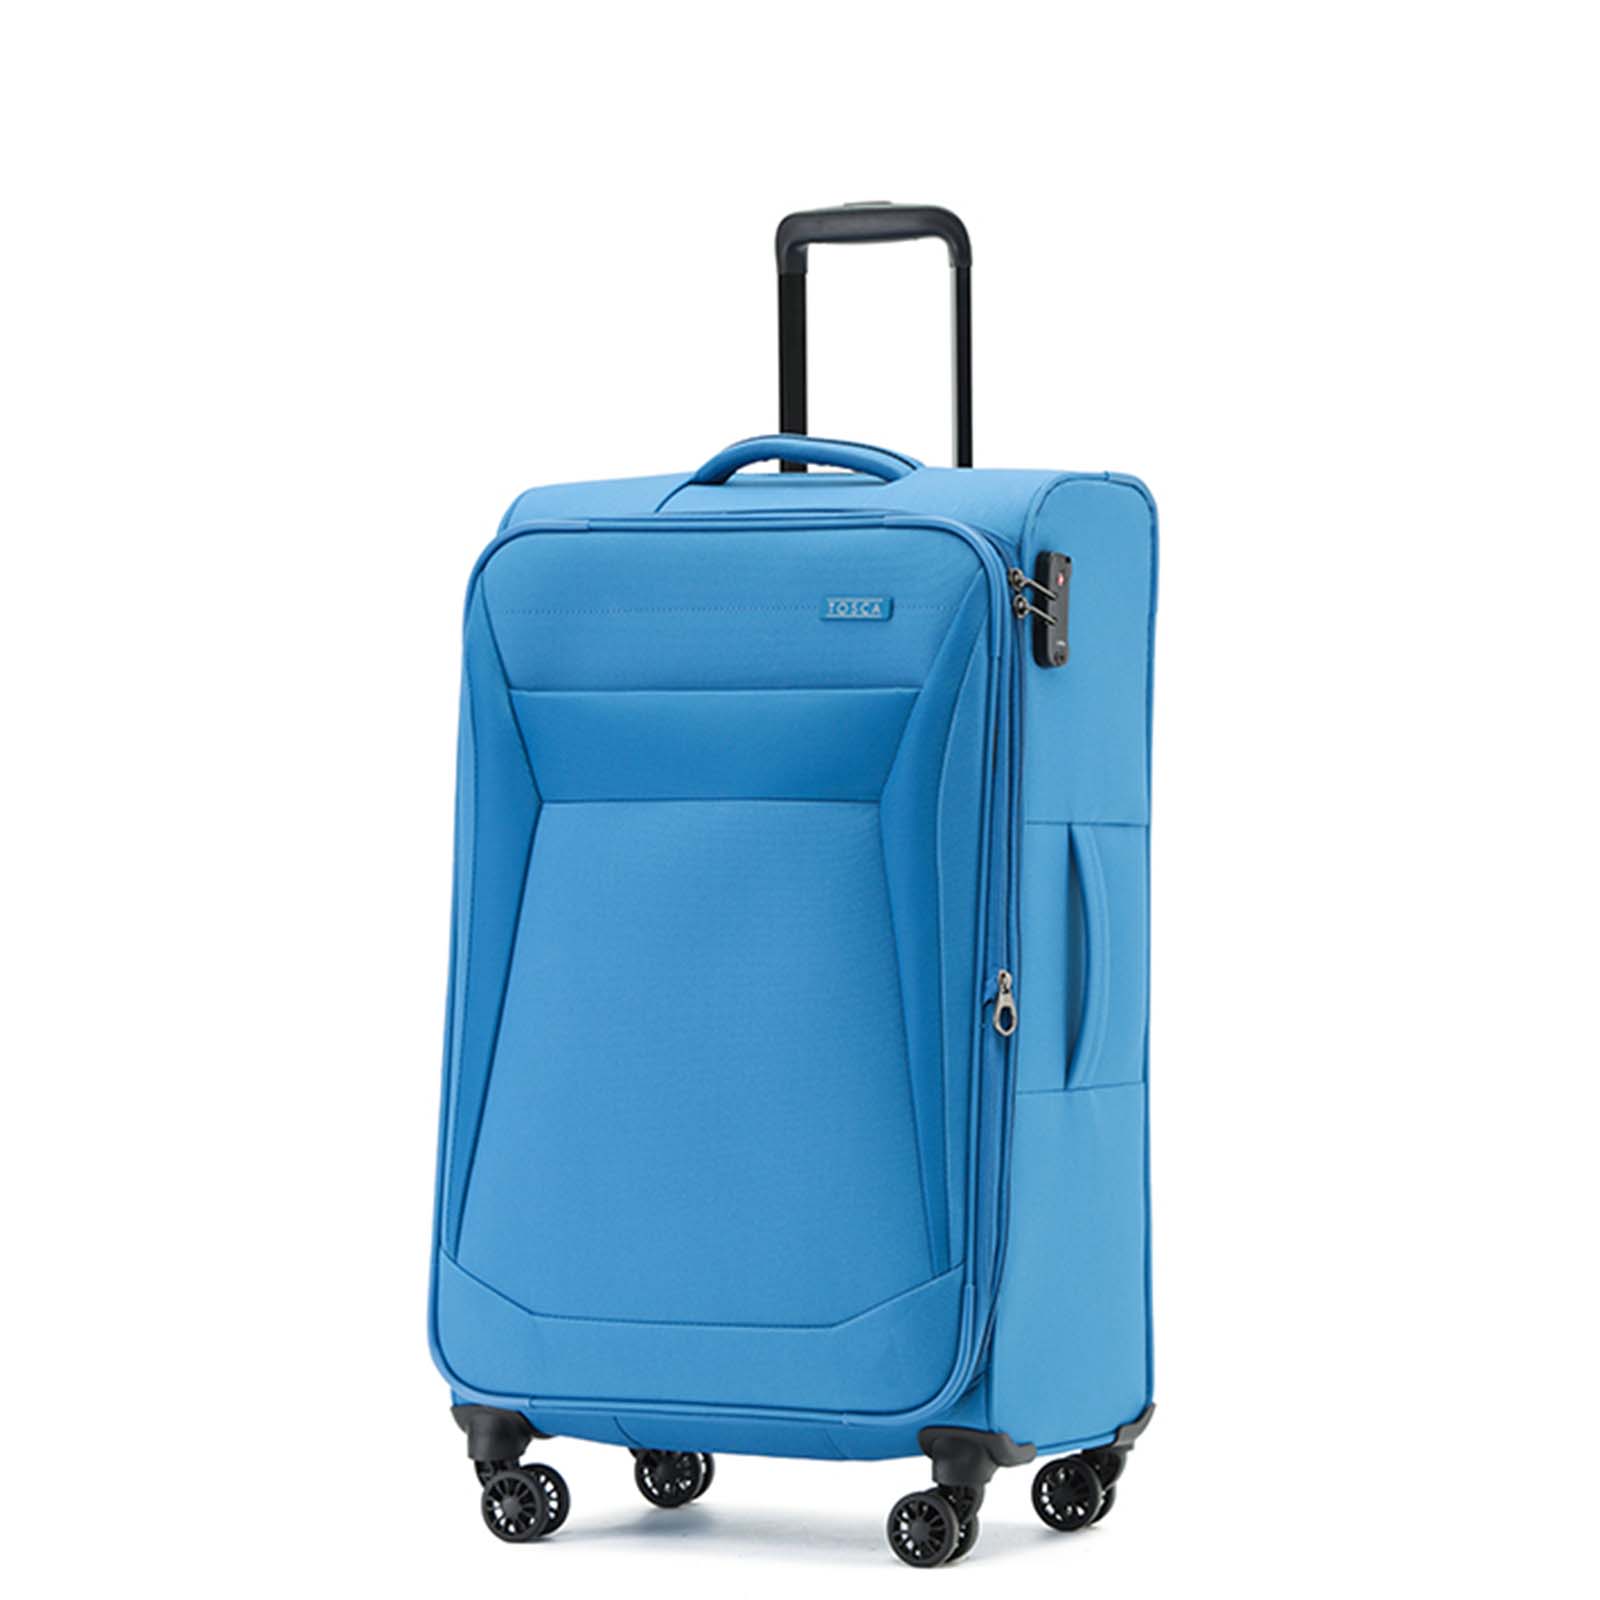 Tosca-Aviator-4-Wheel-Medium-Suitcase-Blue-Front-Angle